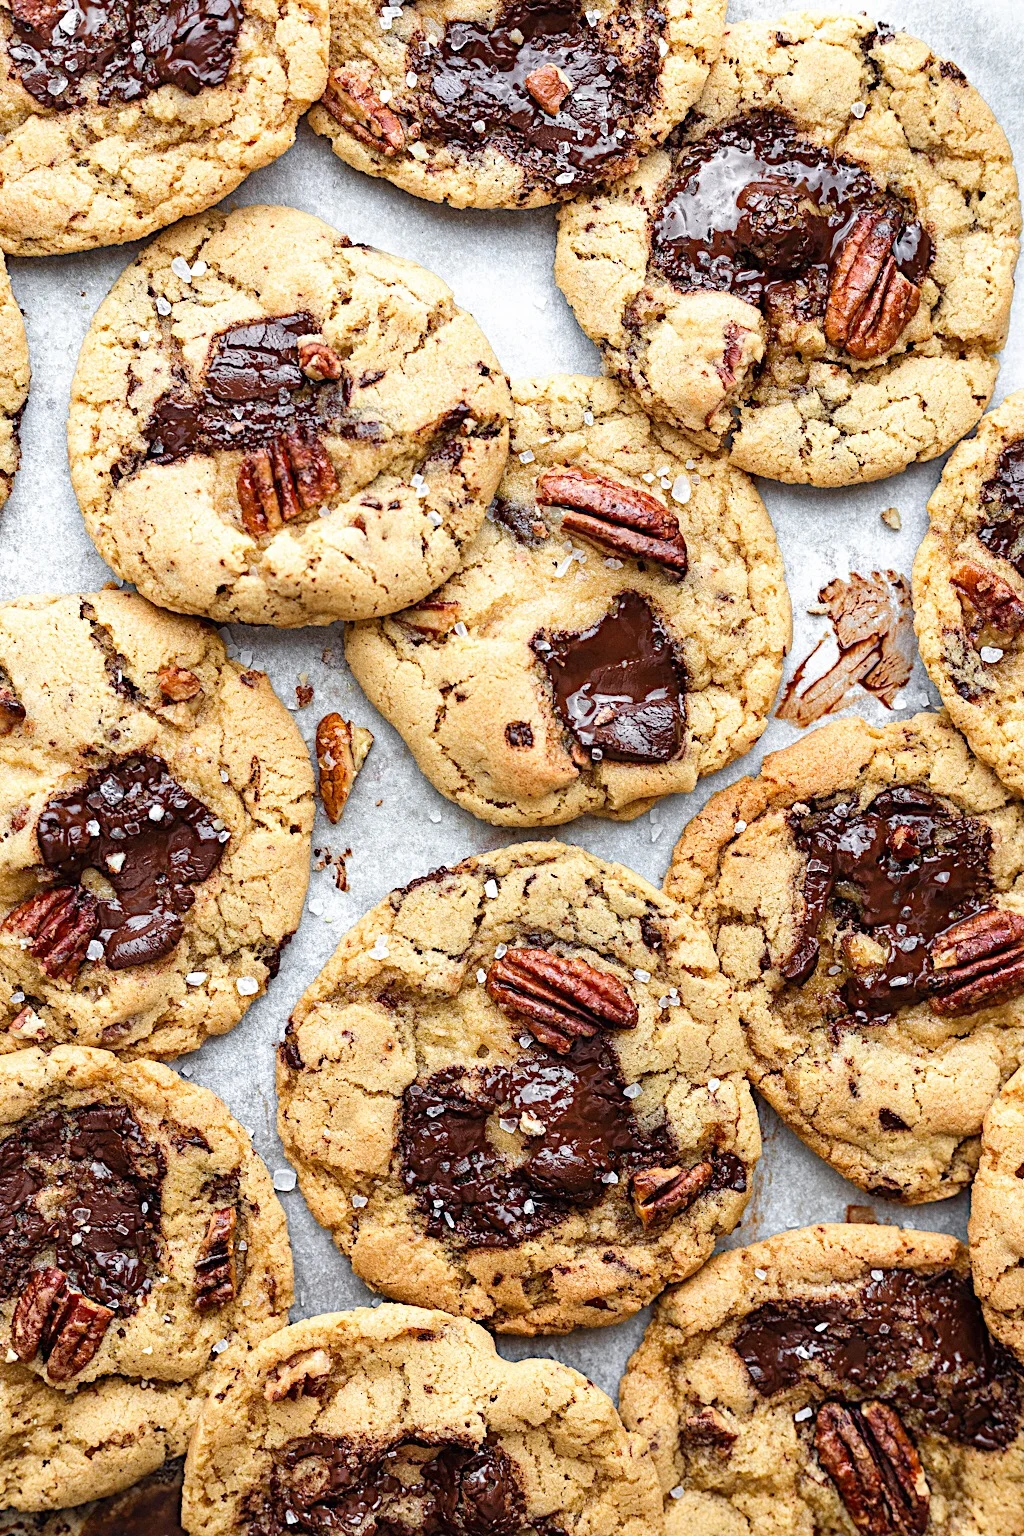 Vegan Maple Pecan Cookies #cookies #maplesyrup #pecan #vegan #dairyfree #christmas #recipe